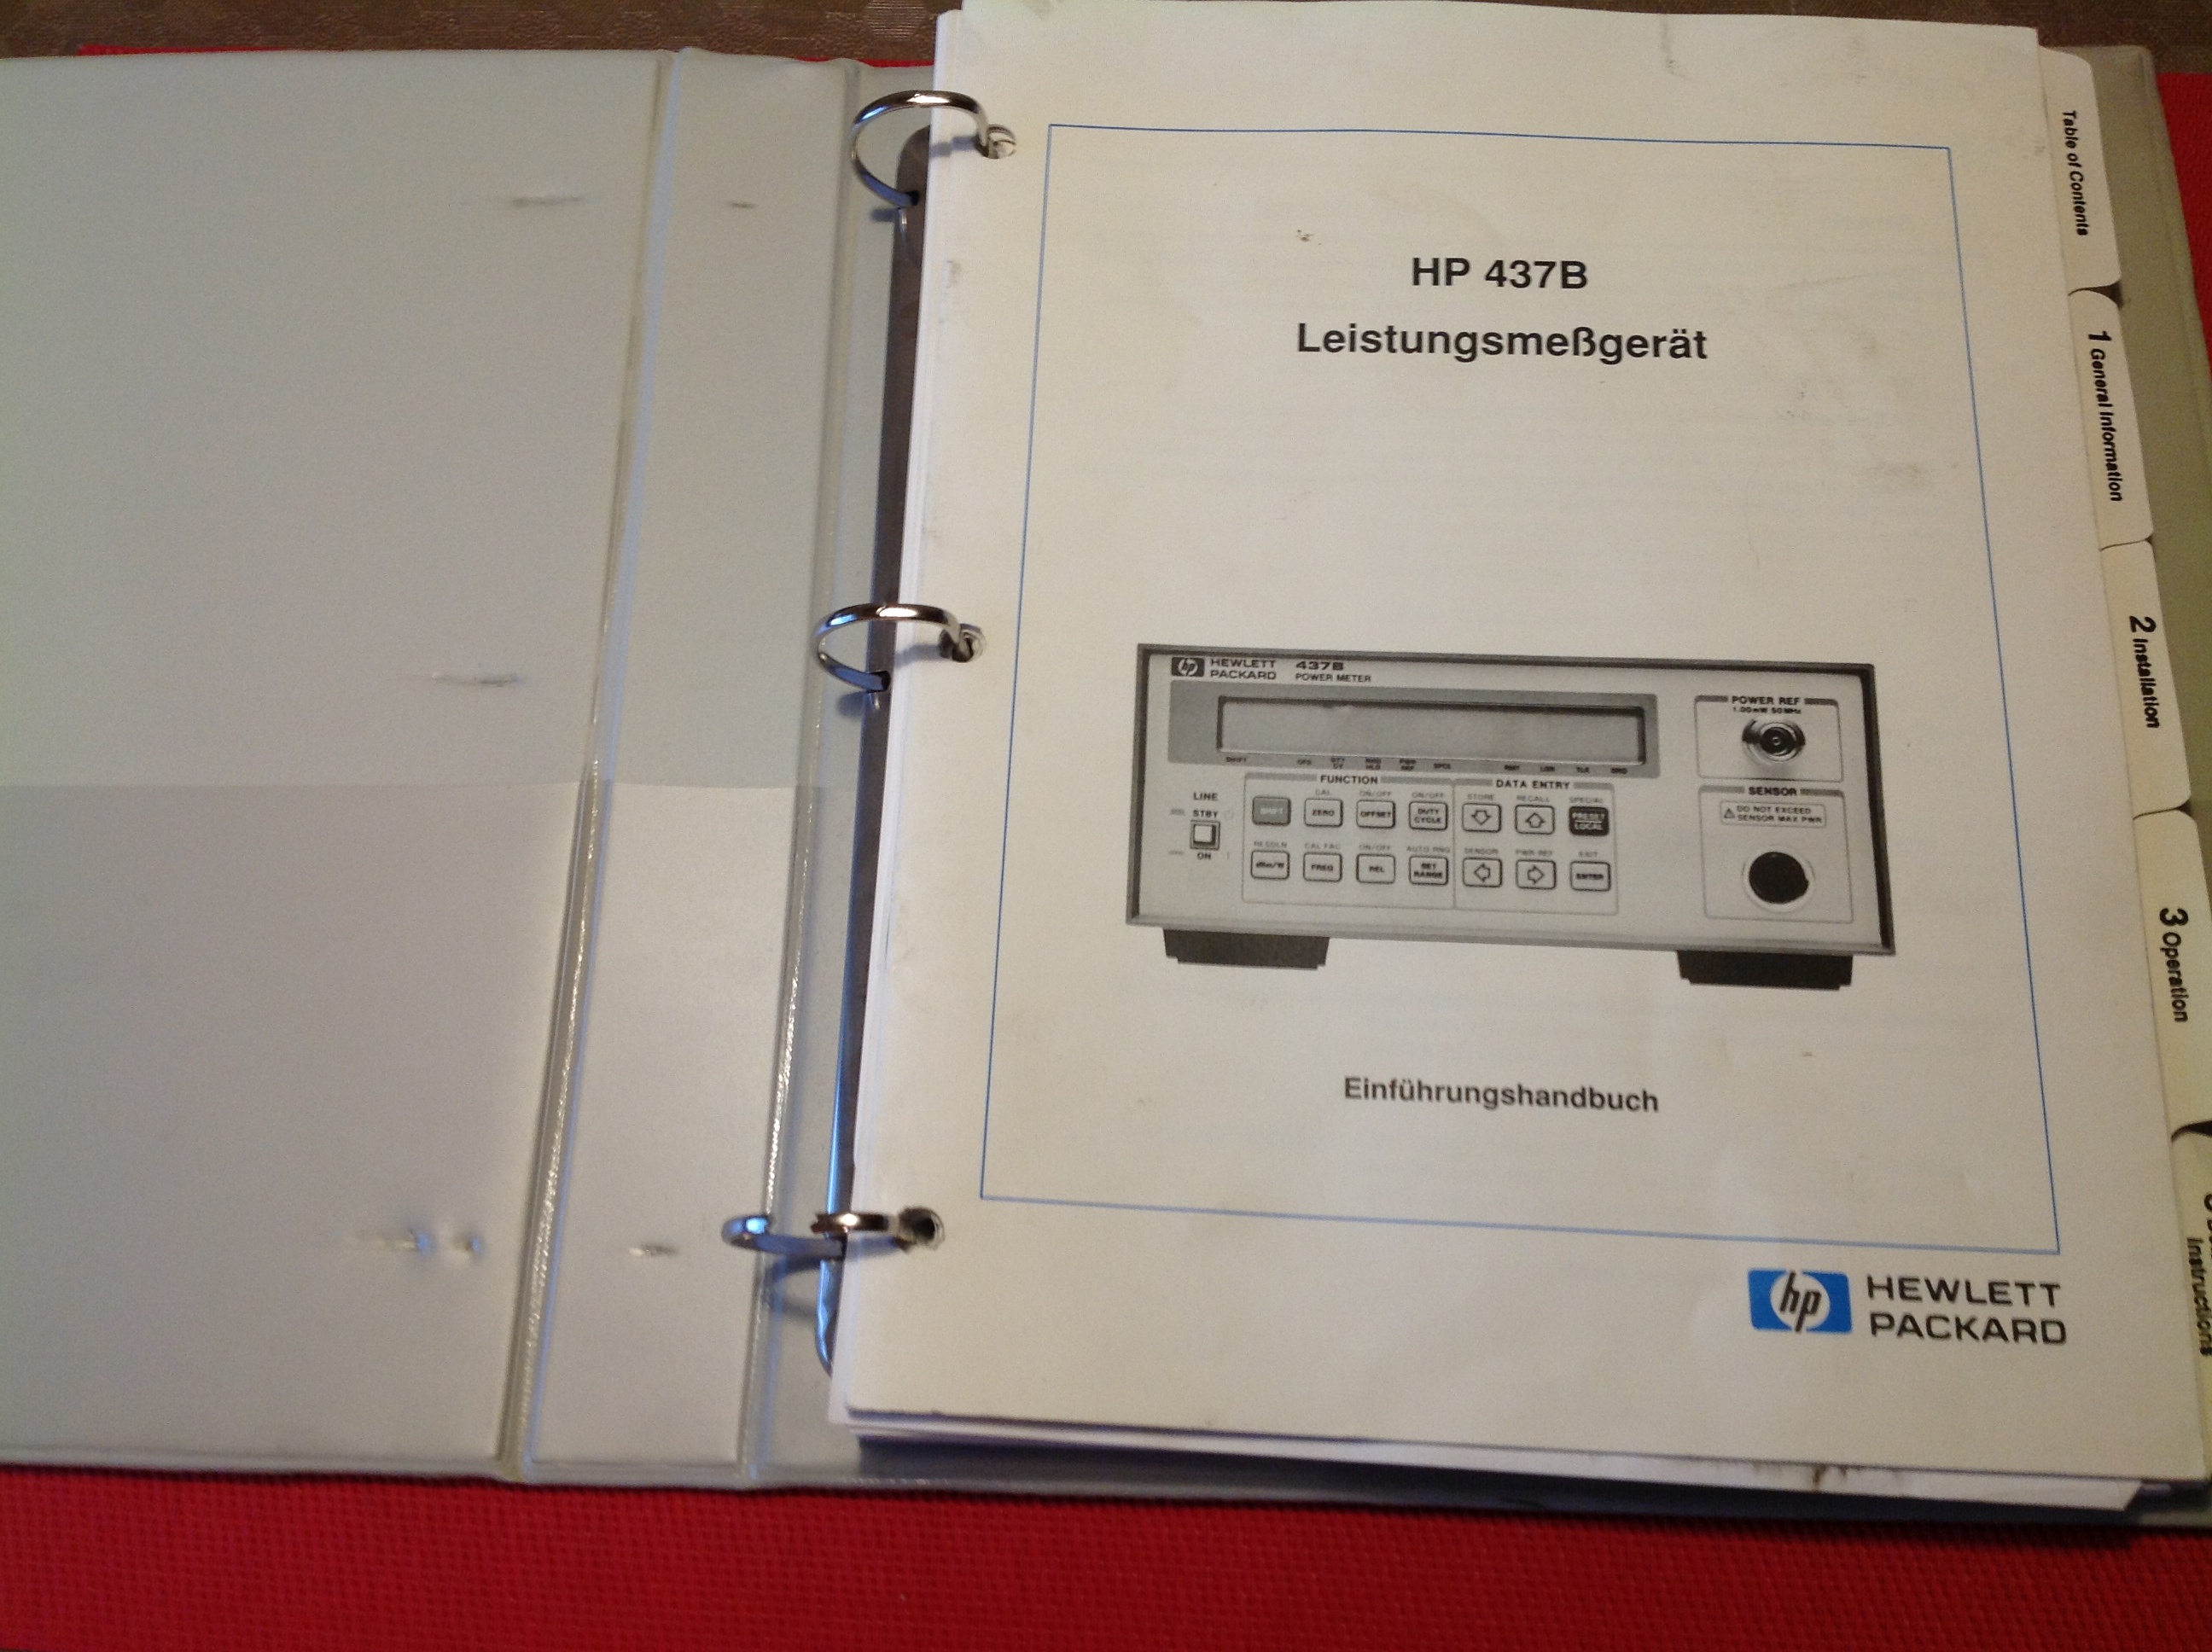 Hewlett Packard 437B Power Meter Operating Manual